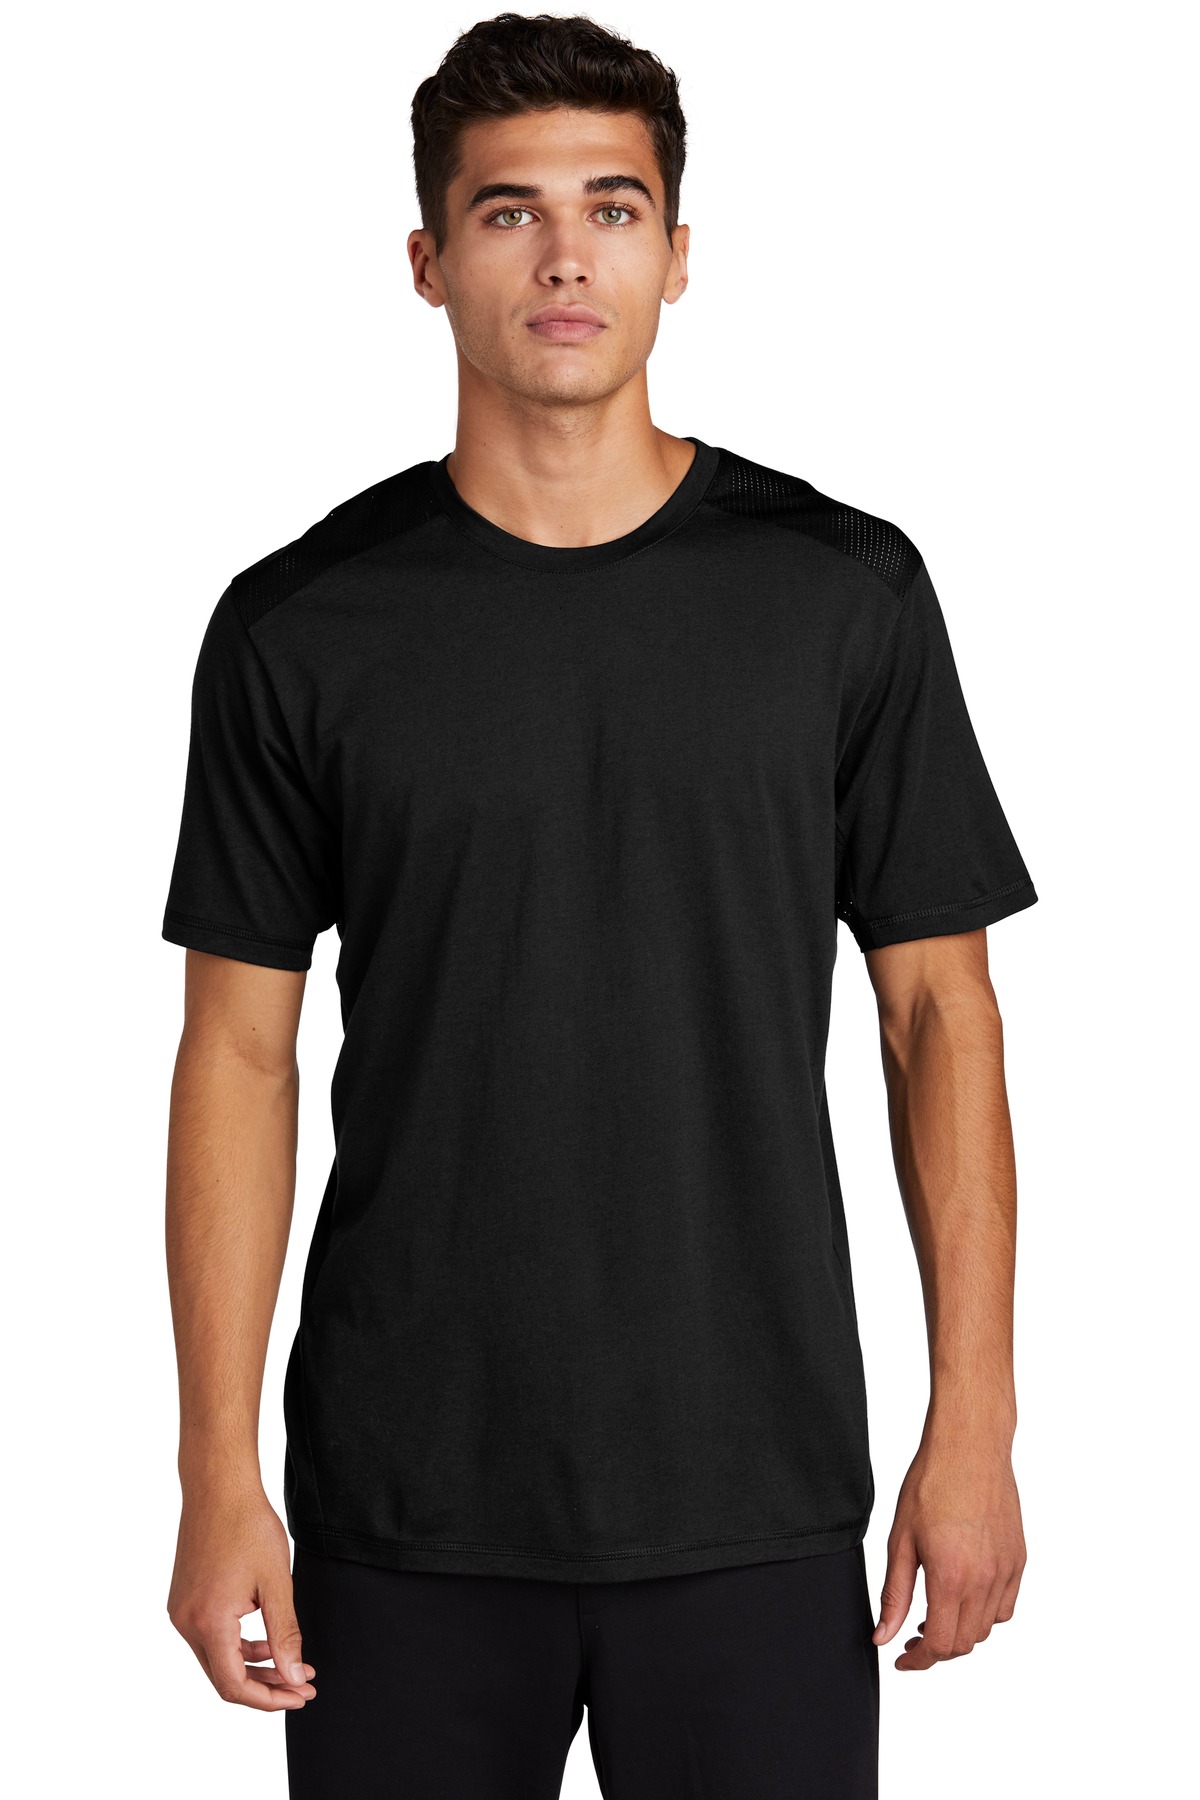 Sport-Tek PosiCharge Tri-Blend Wicking Draft T-Shirt - ST410